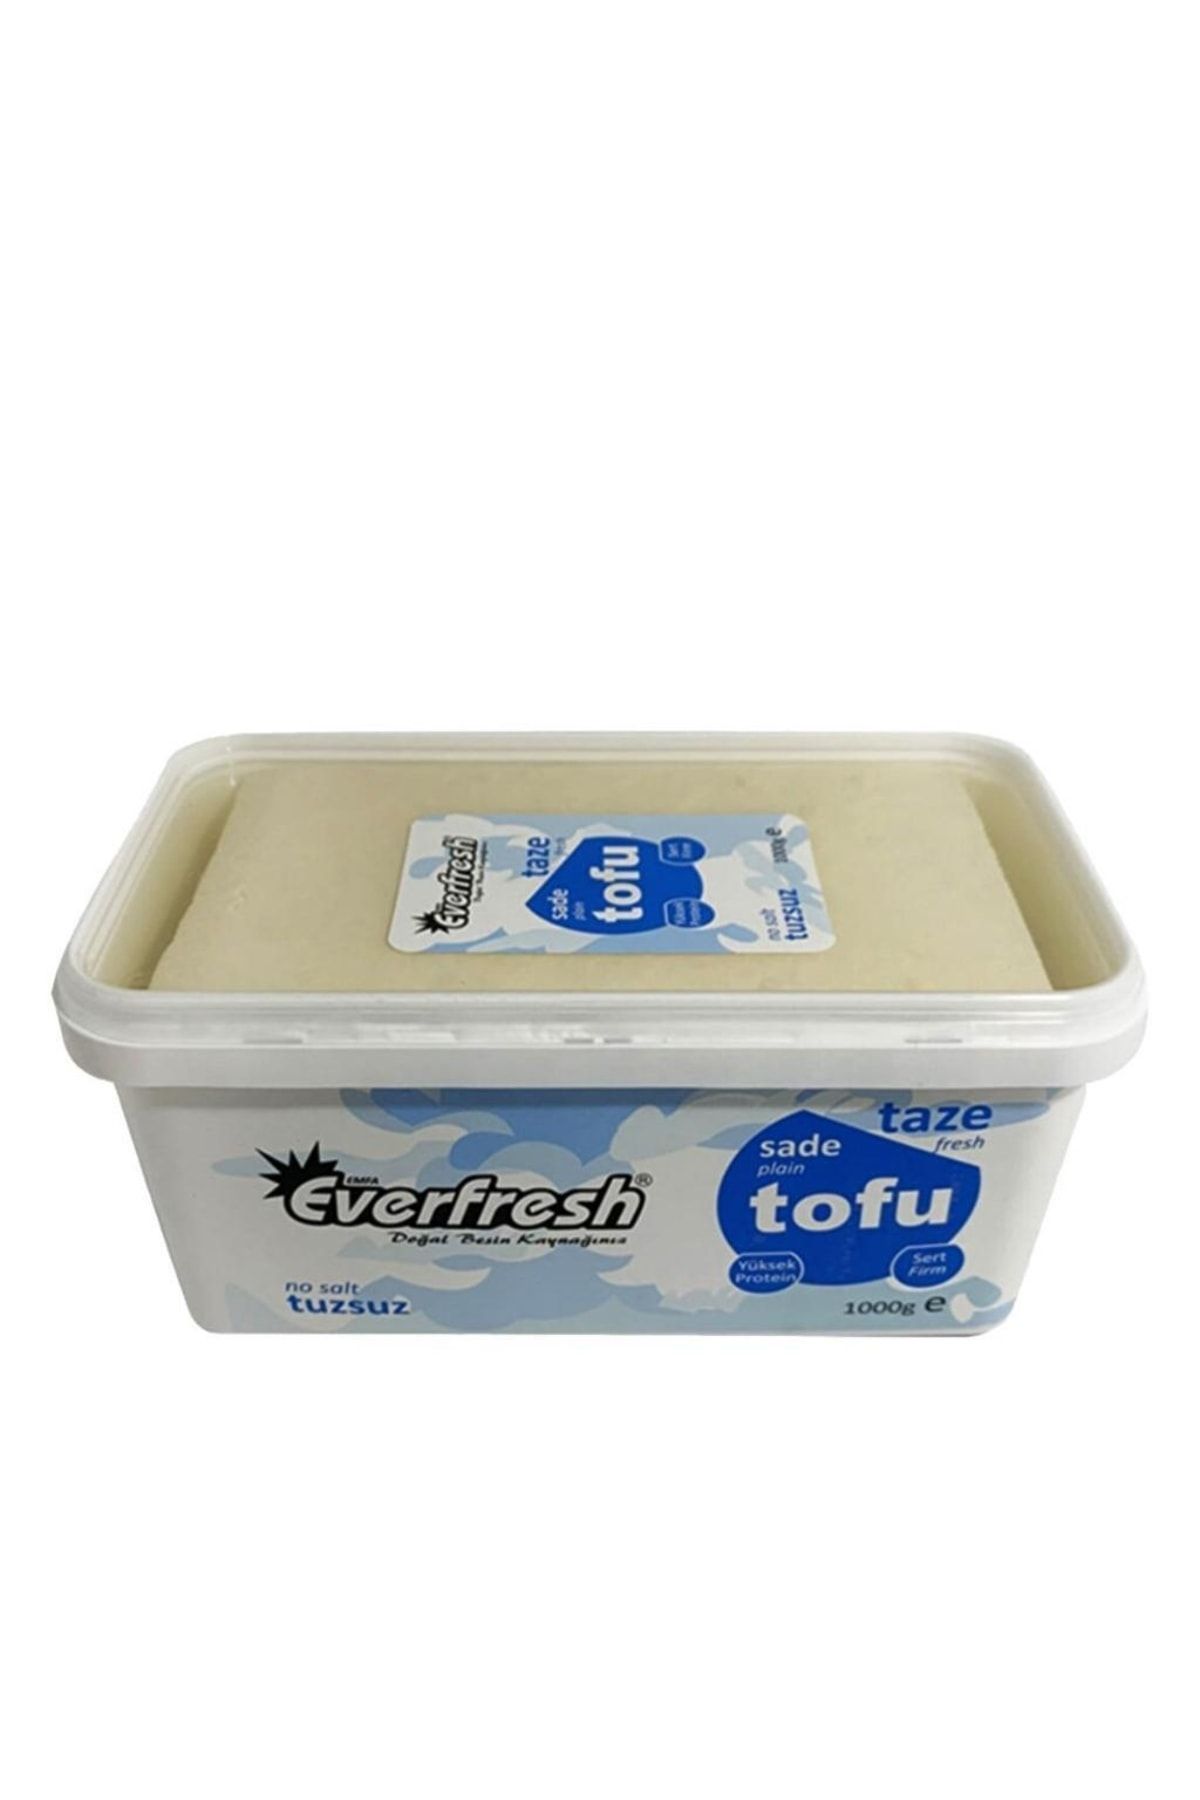 Everfresh Sade Tofu Tuzsuz 1000 G